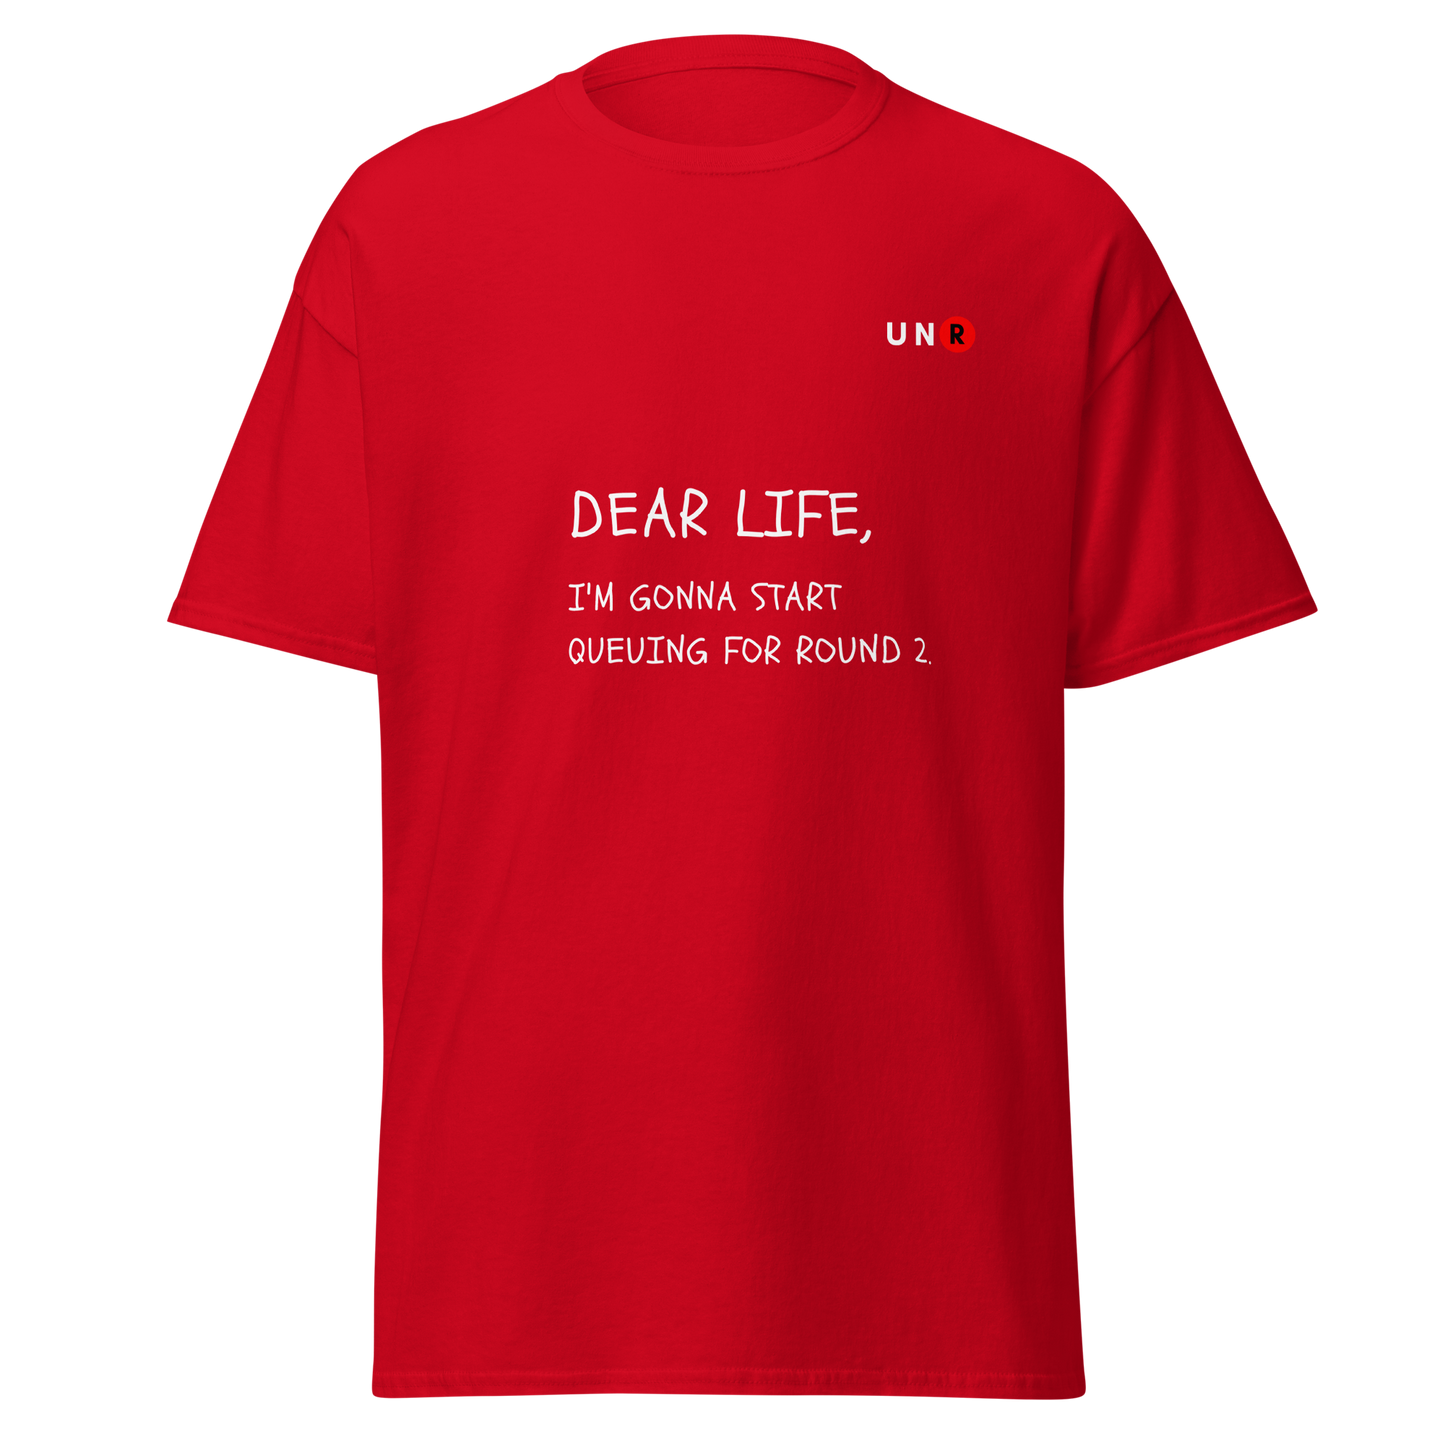 Dear Life, Queue for round 2 T-shirt